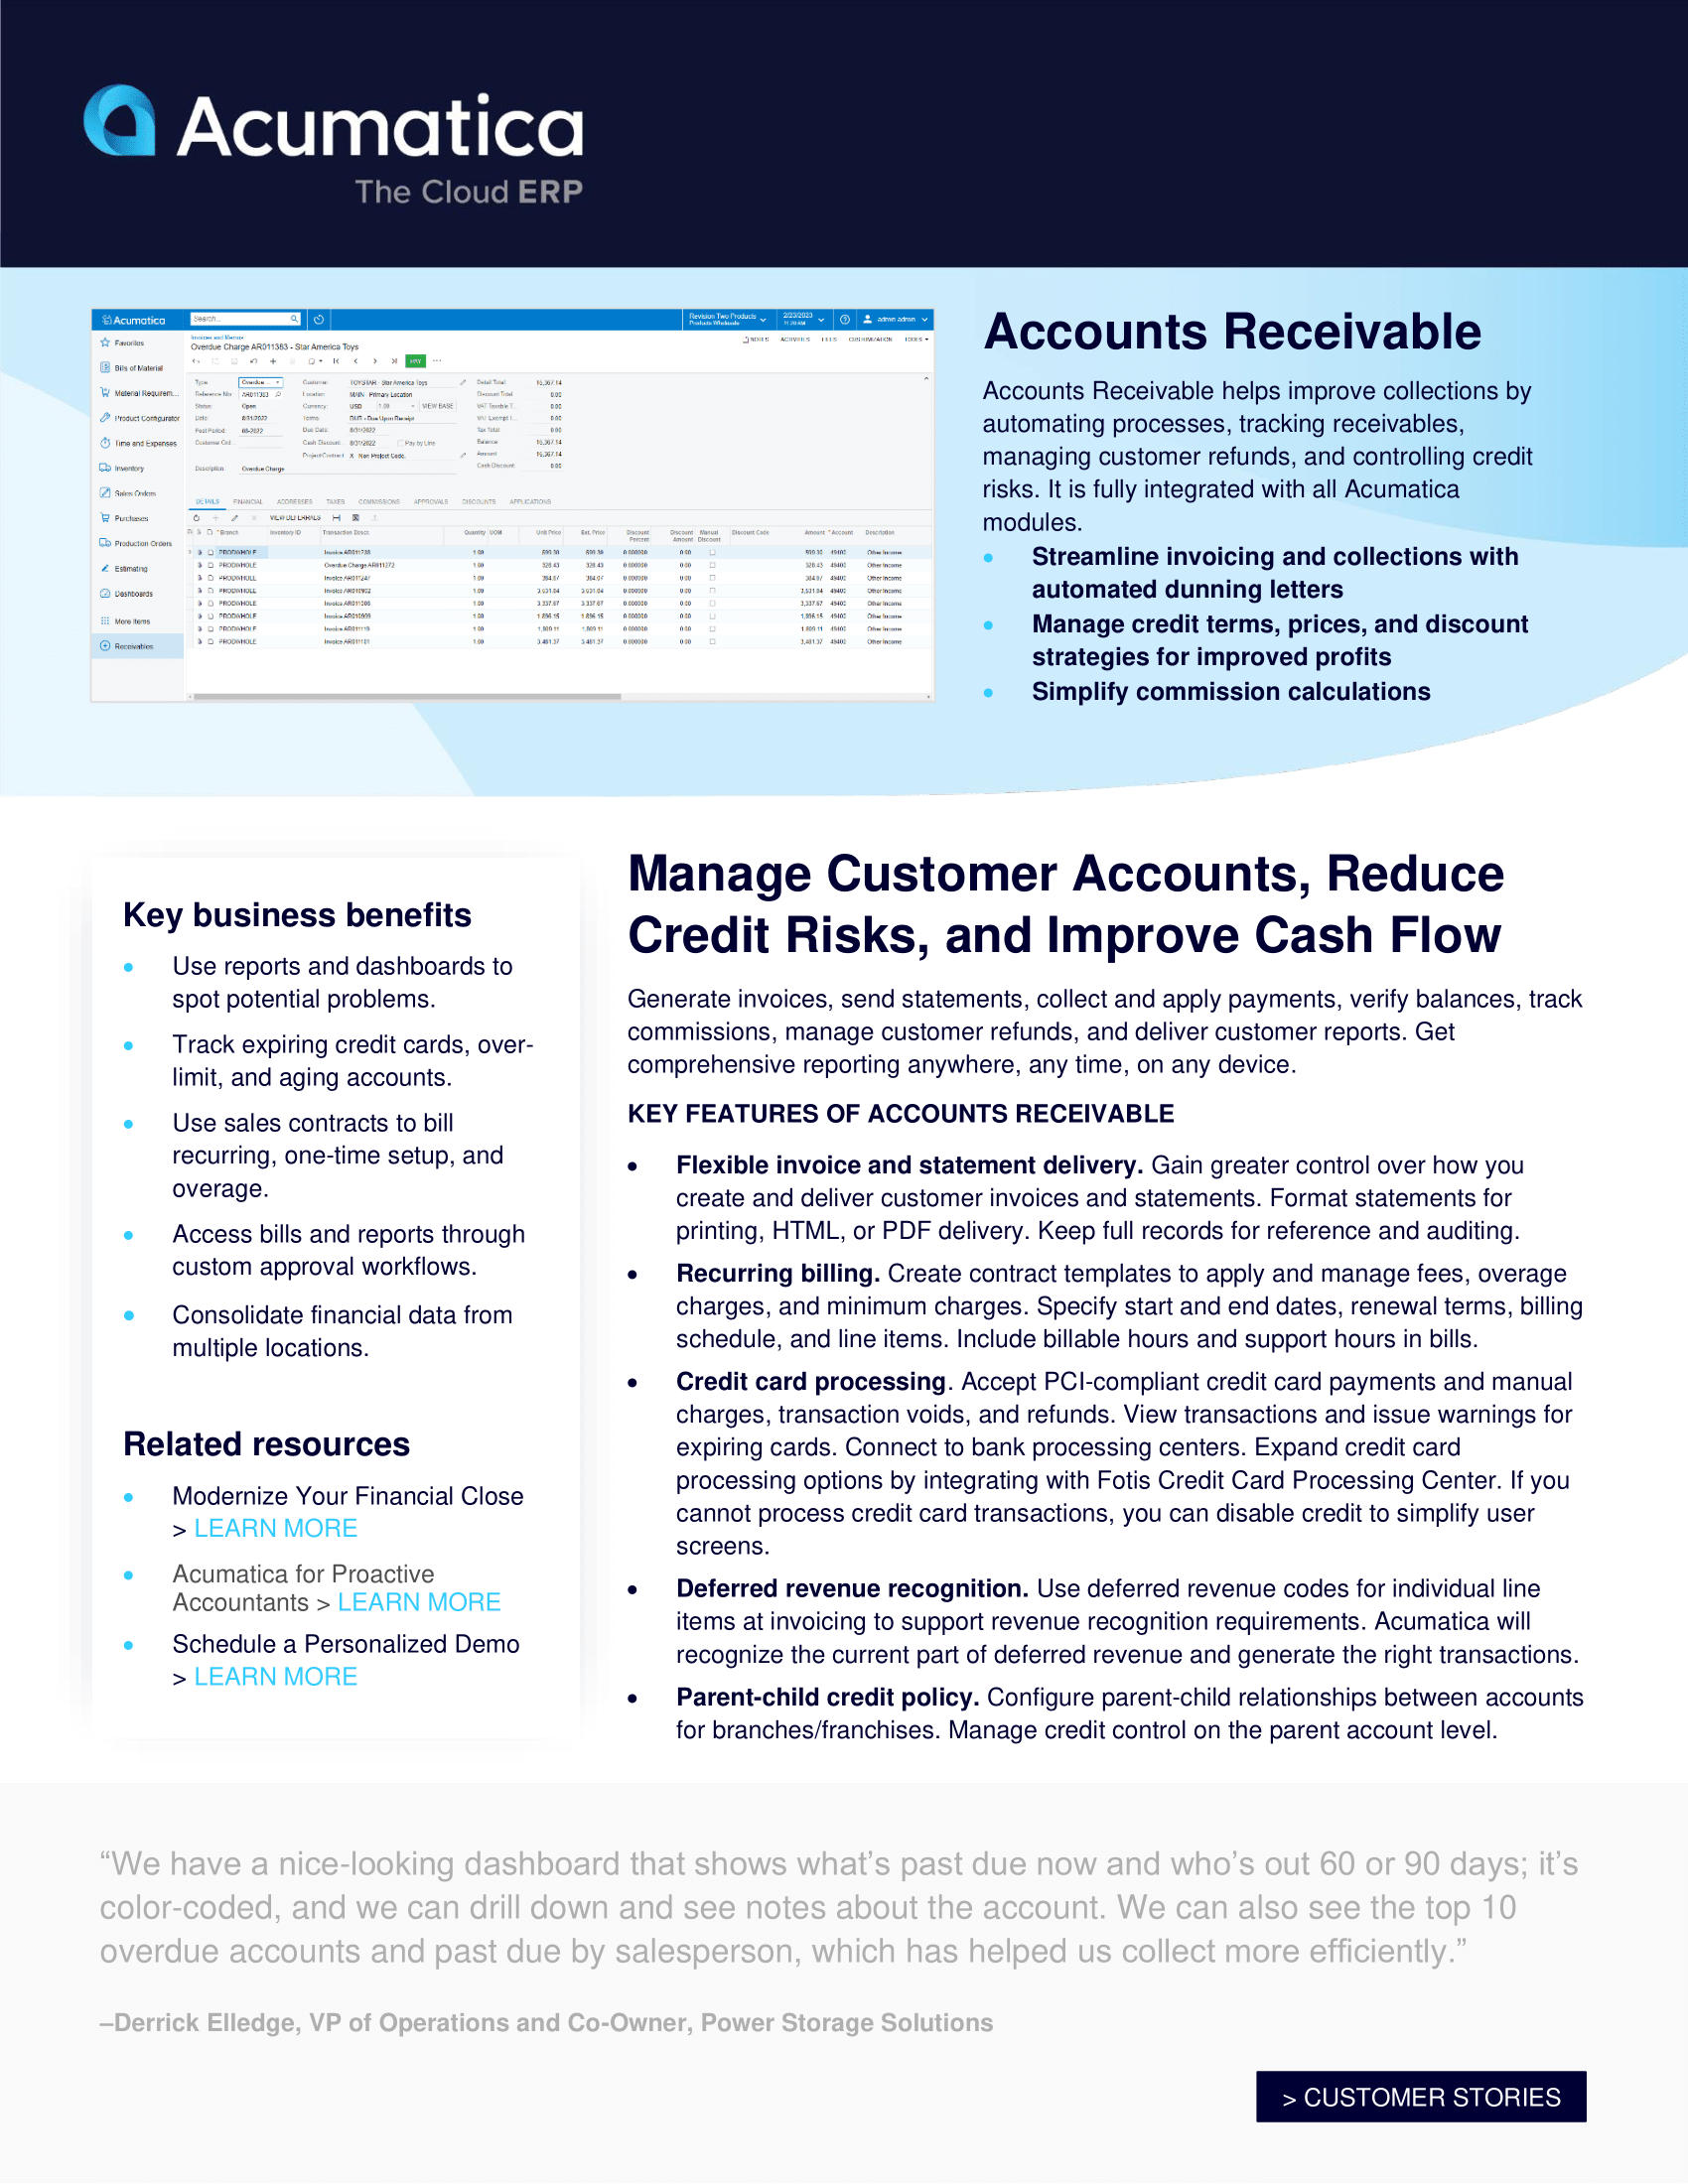 Accounts Receivable Product Sheet